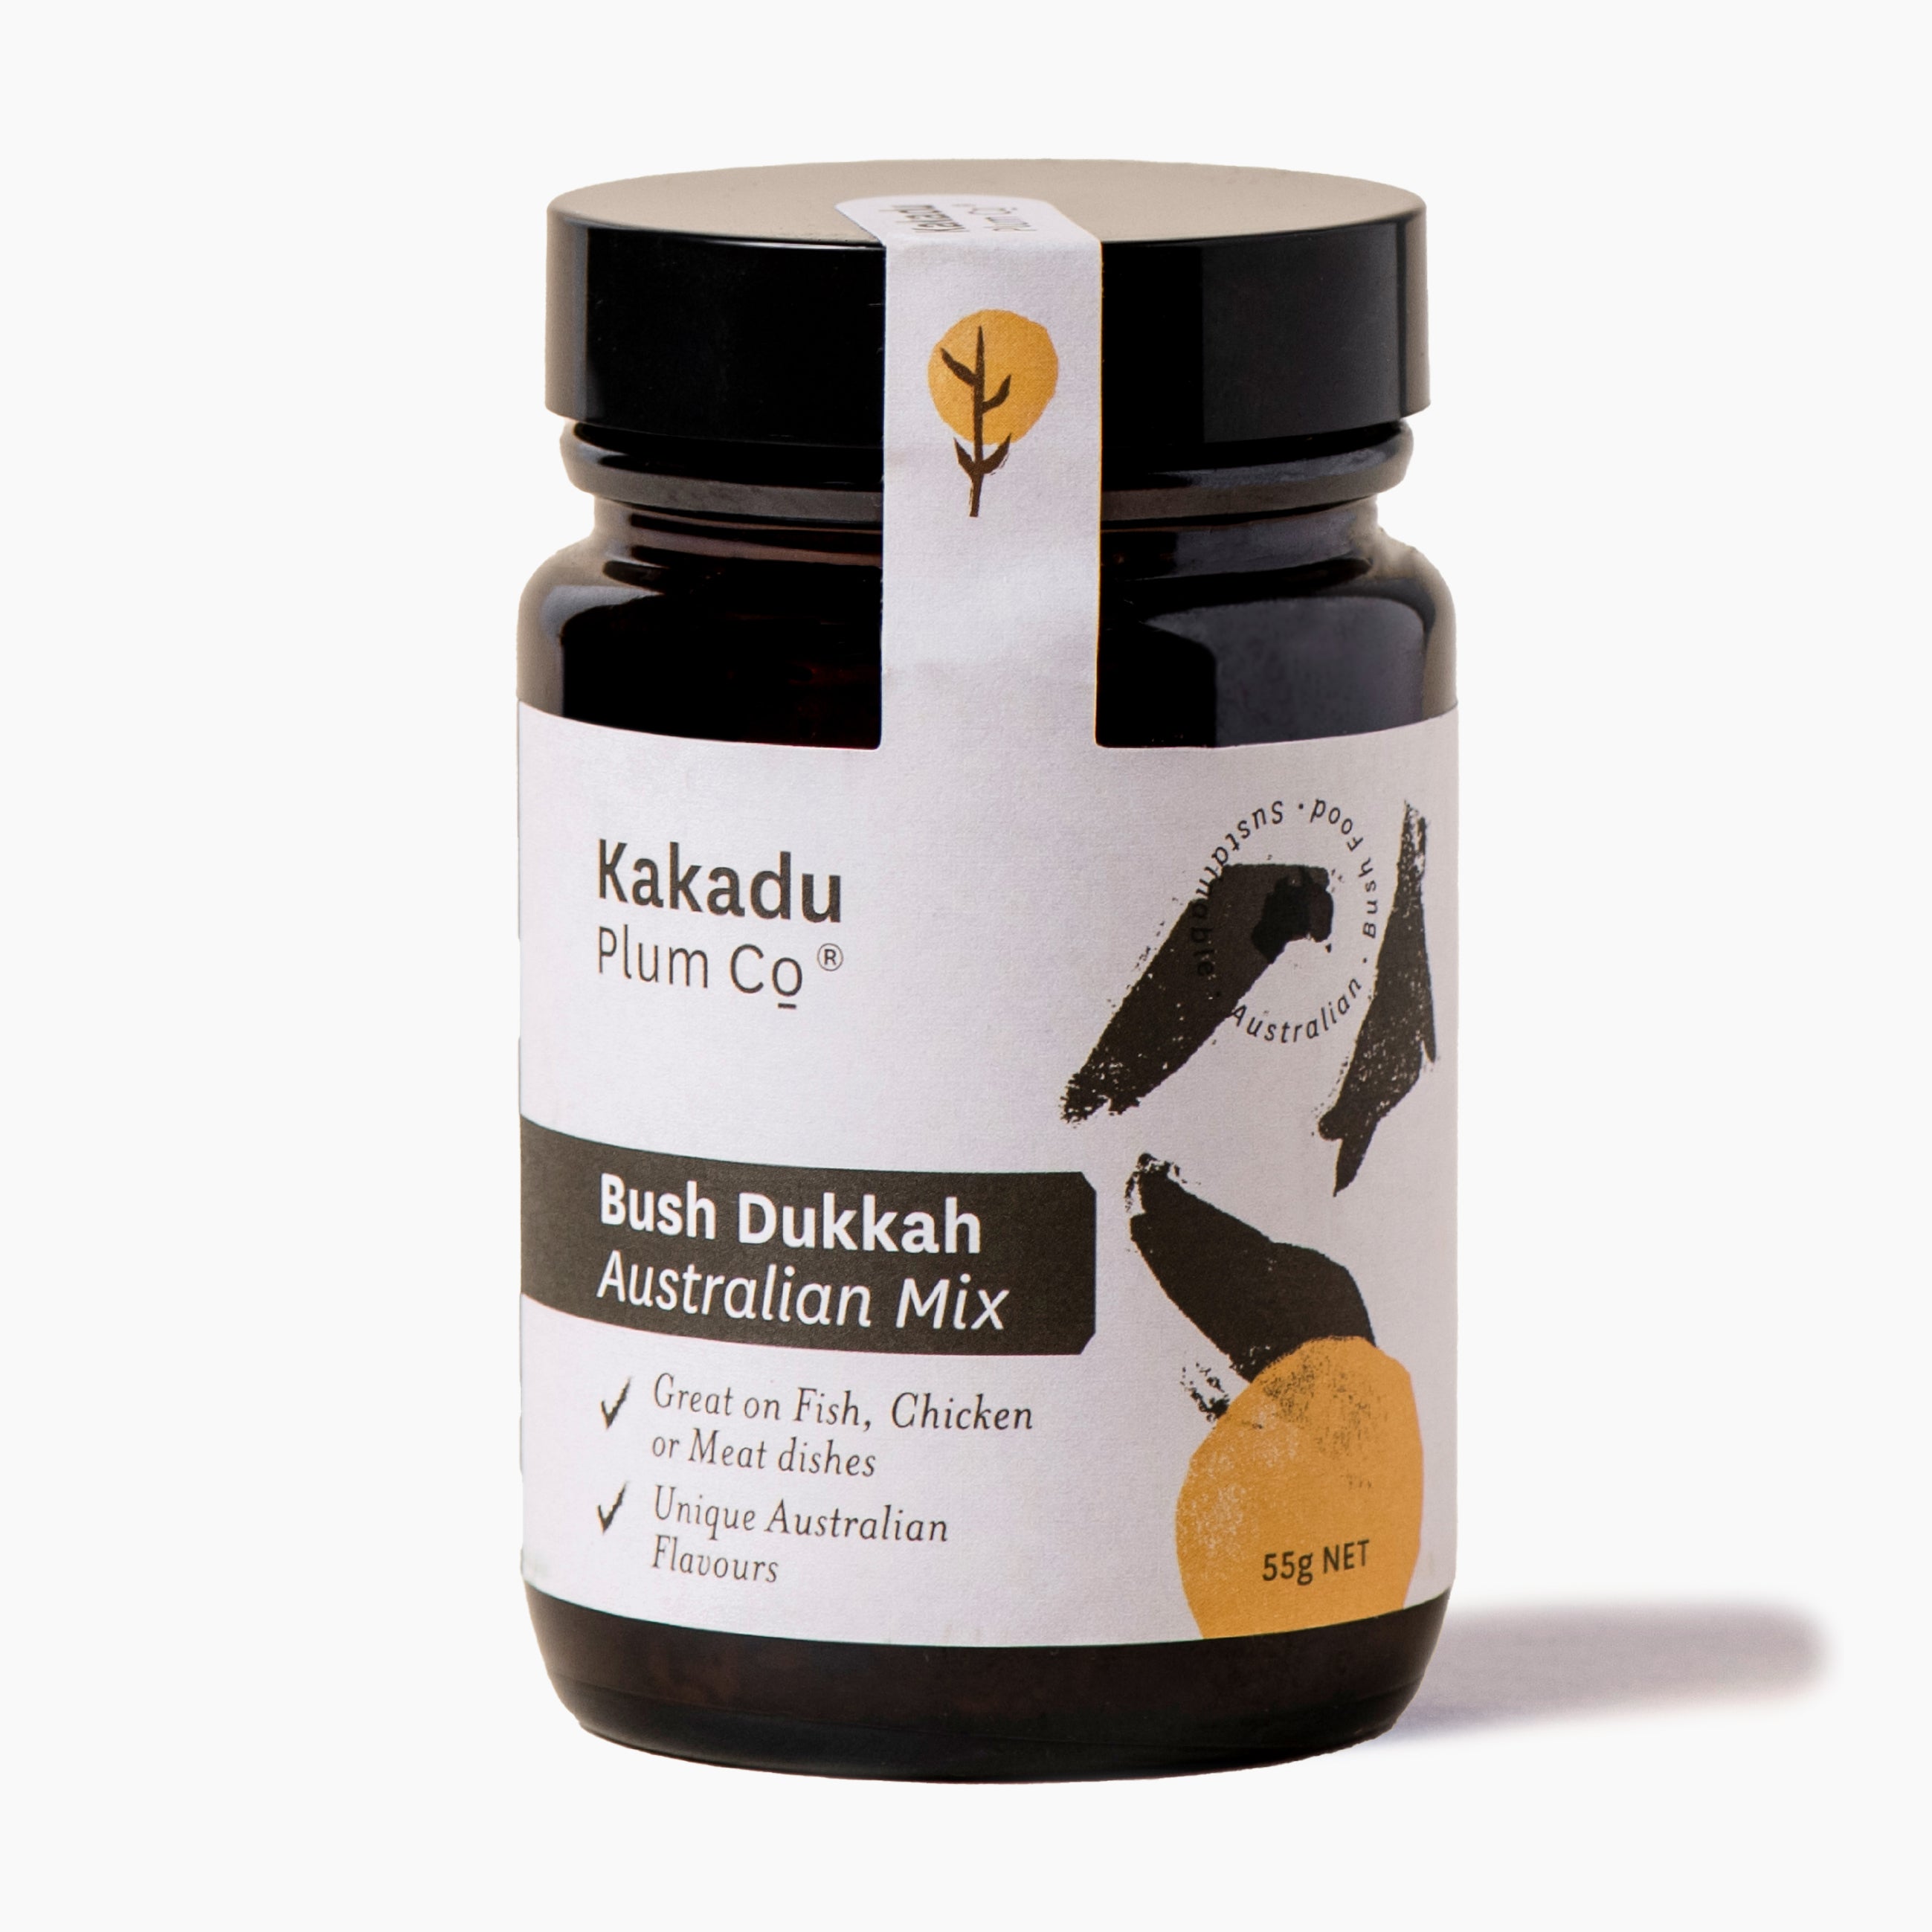 Kakadu-Plum-Bush-Dukkah-Australian-Mix-50g_AdobeRGB-300dpi-HighRes_1_2517a59f-9666-414c-8ca8-002438b63966.jpg